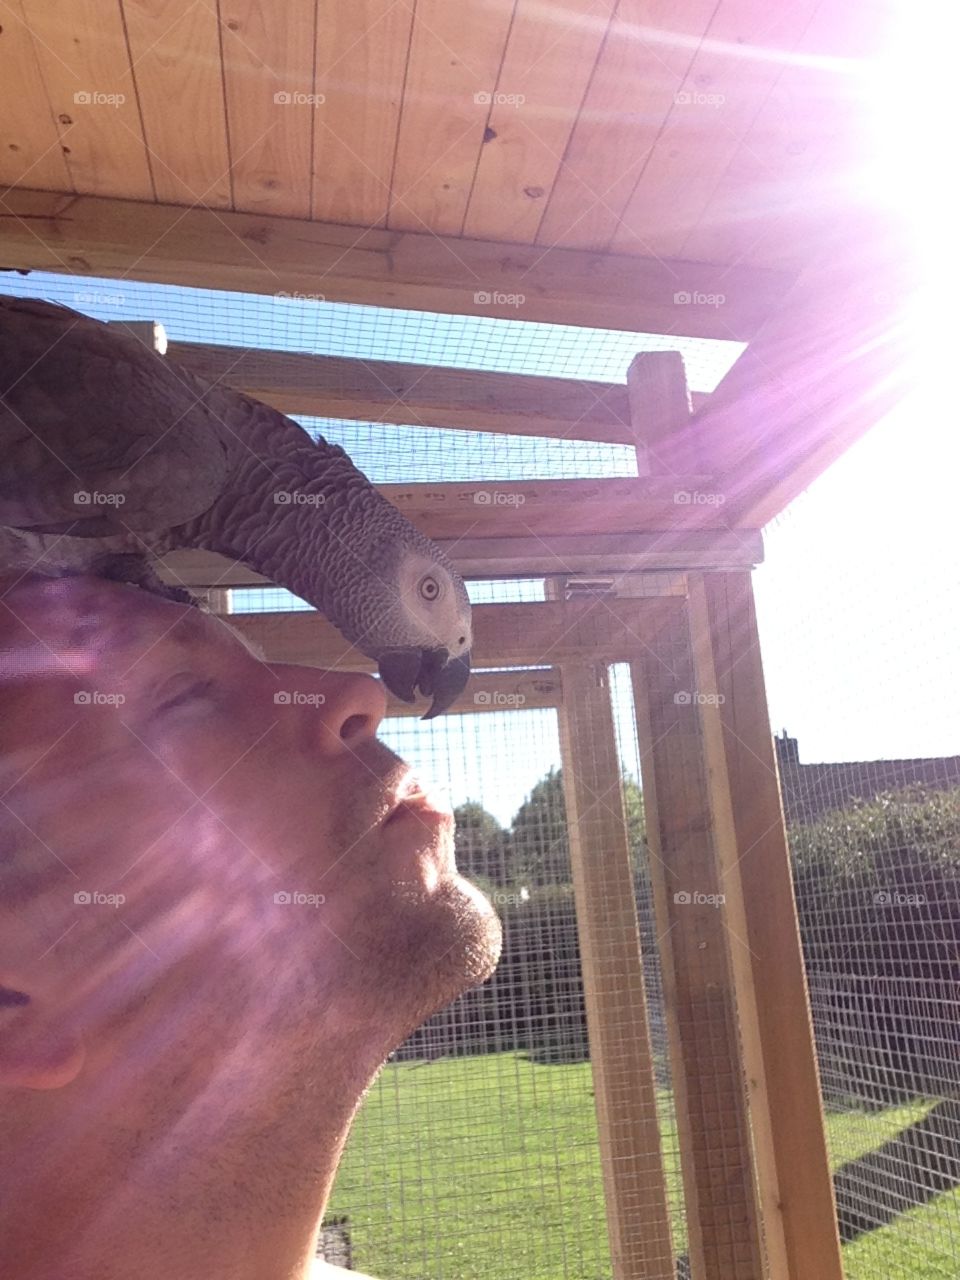 Parrot. Sitting on my head